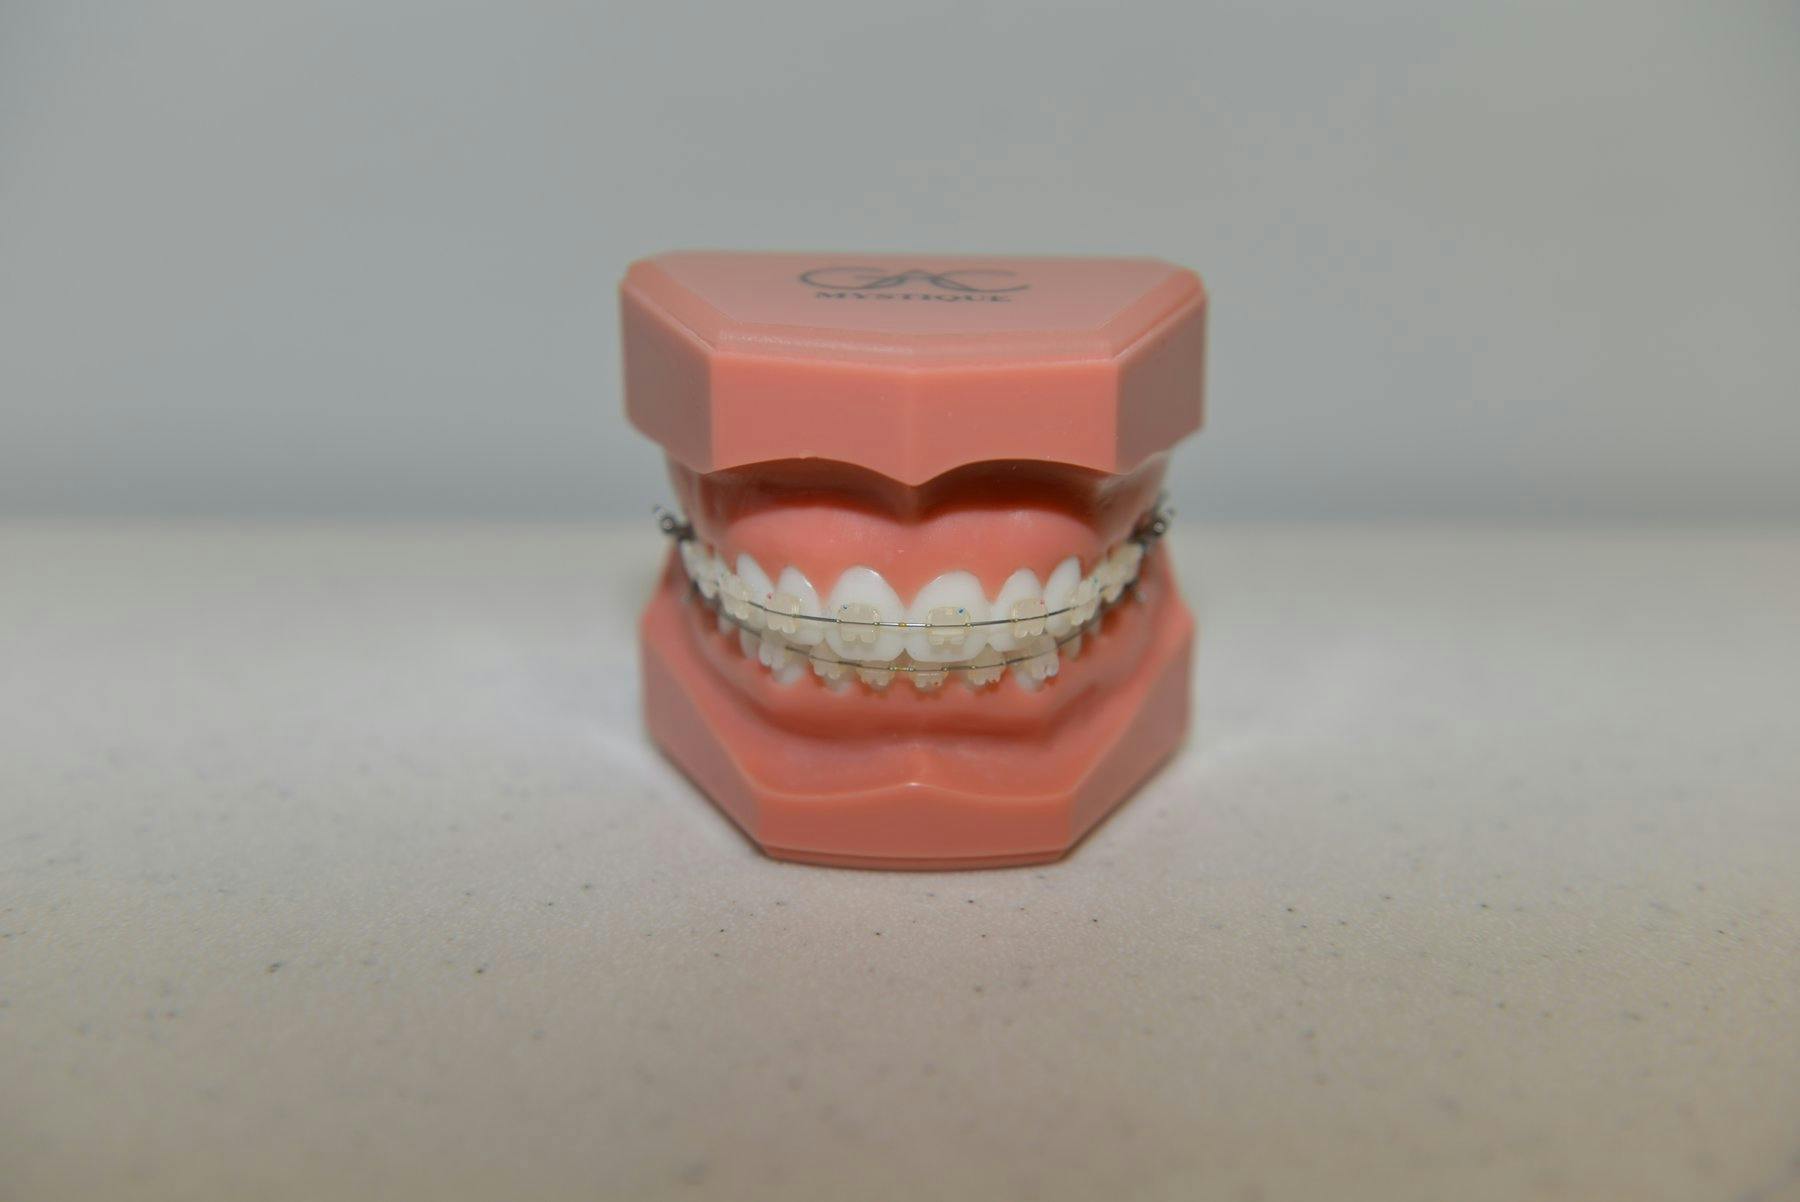 Photo of ceramic braces on a teeth model